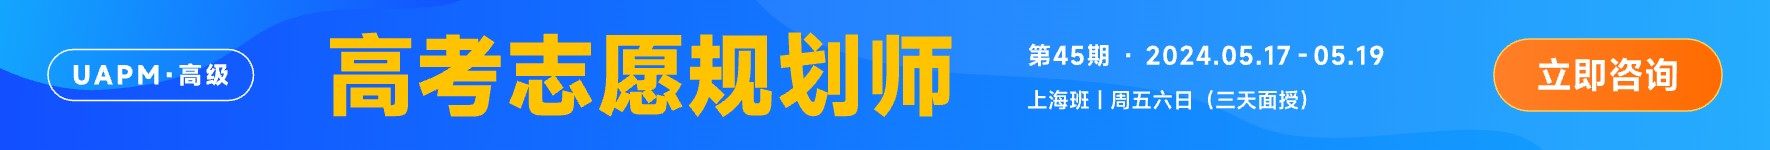 CN-动态资讯-资讯报道